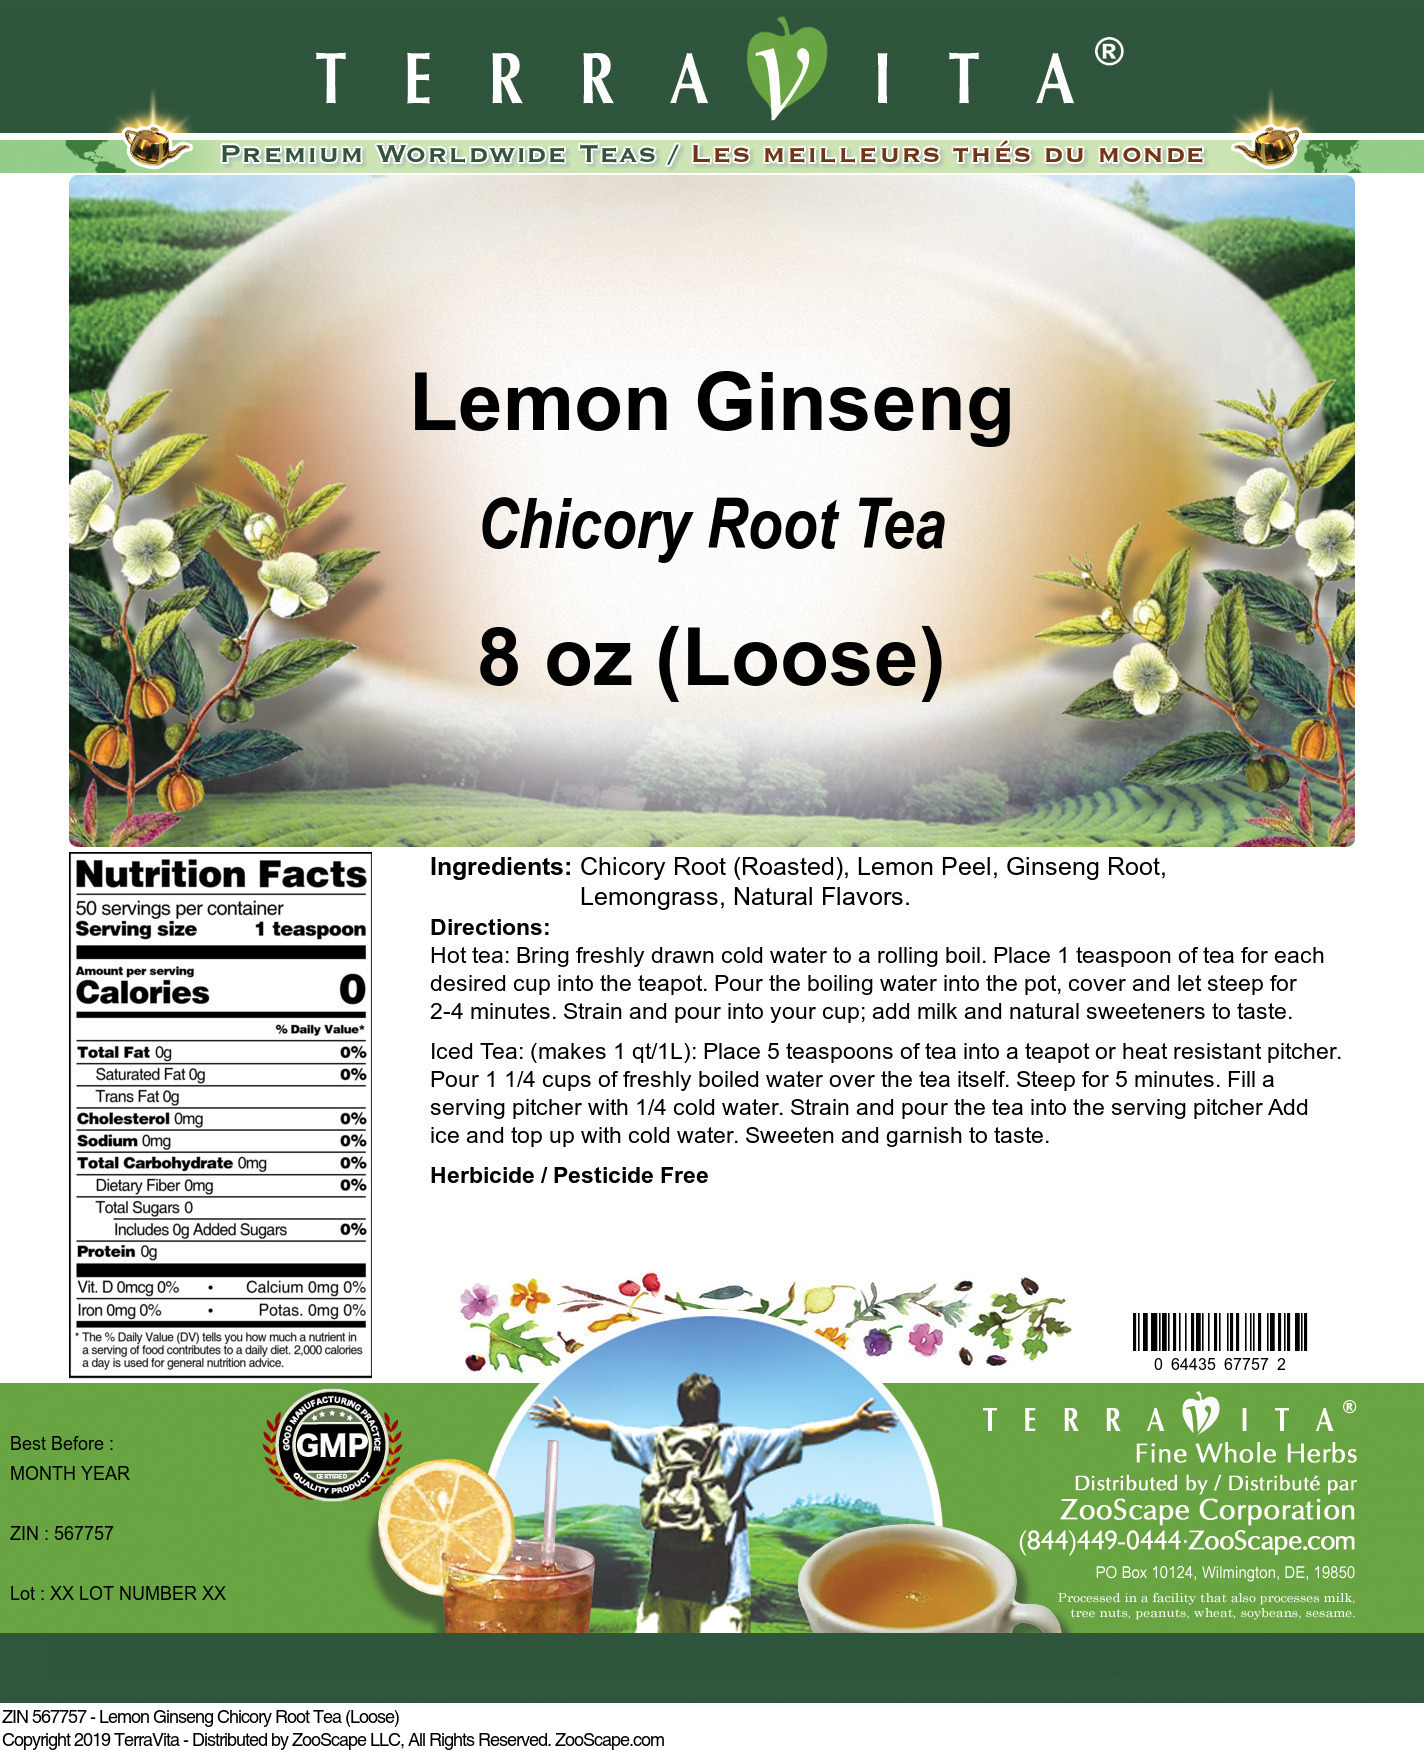 Lemon Ginseng Chicory Root Tea (Loose) - Label